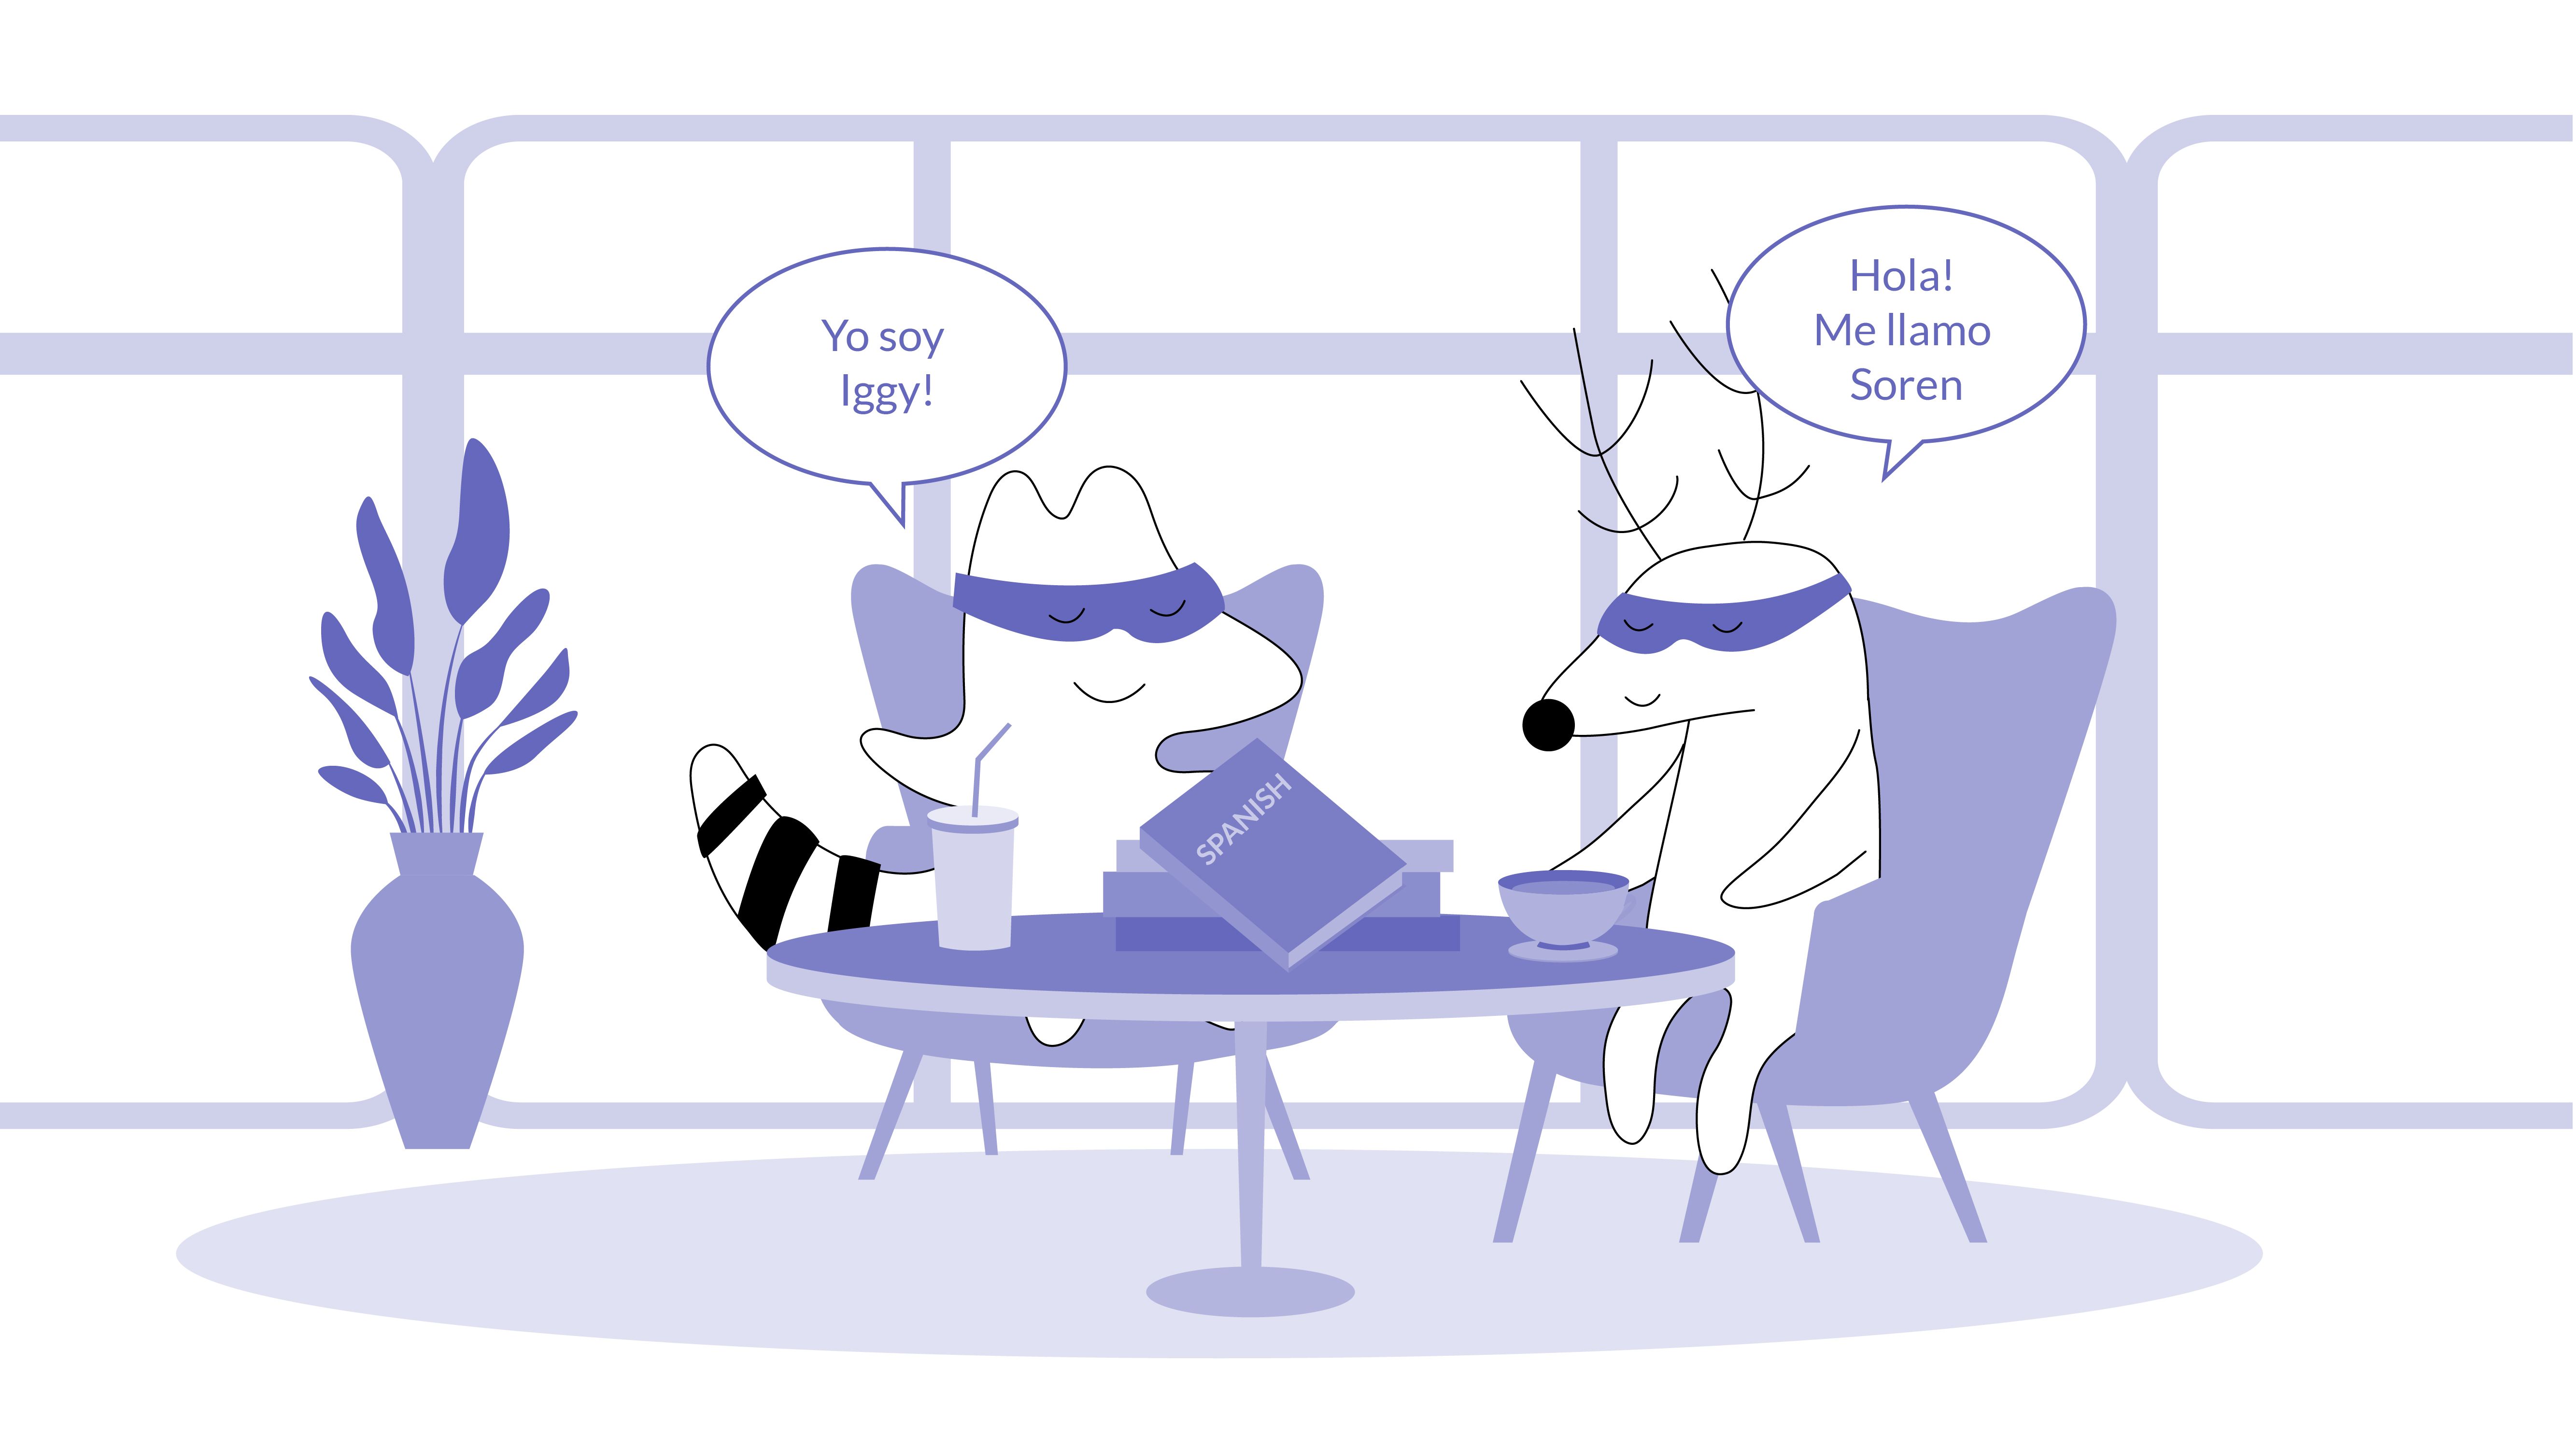 Soren and Iggy sitting at a restaurant, Soren saying “Hola! Me llamo Soren” and Iggy answering “Yo soy Iggy!”.